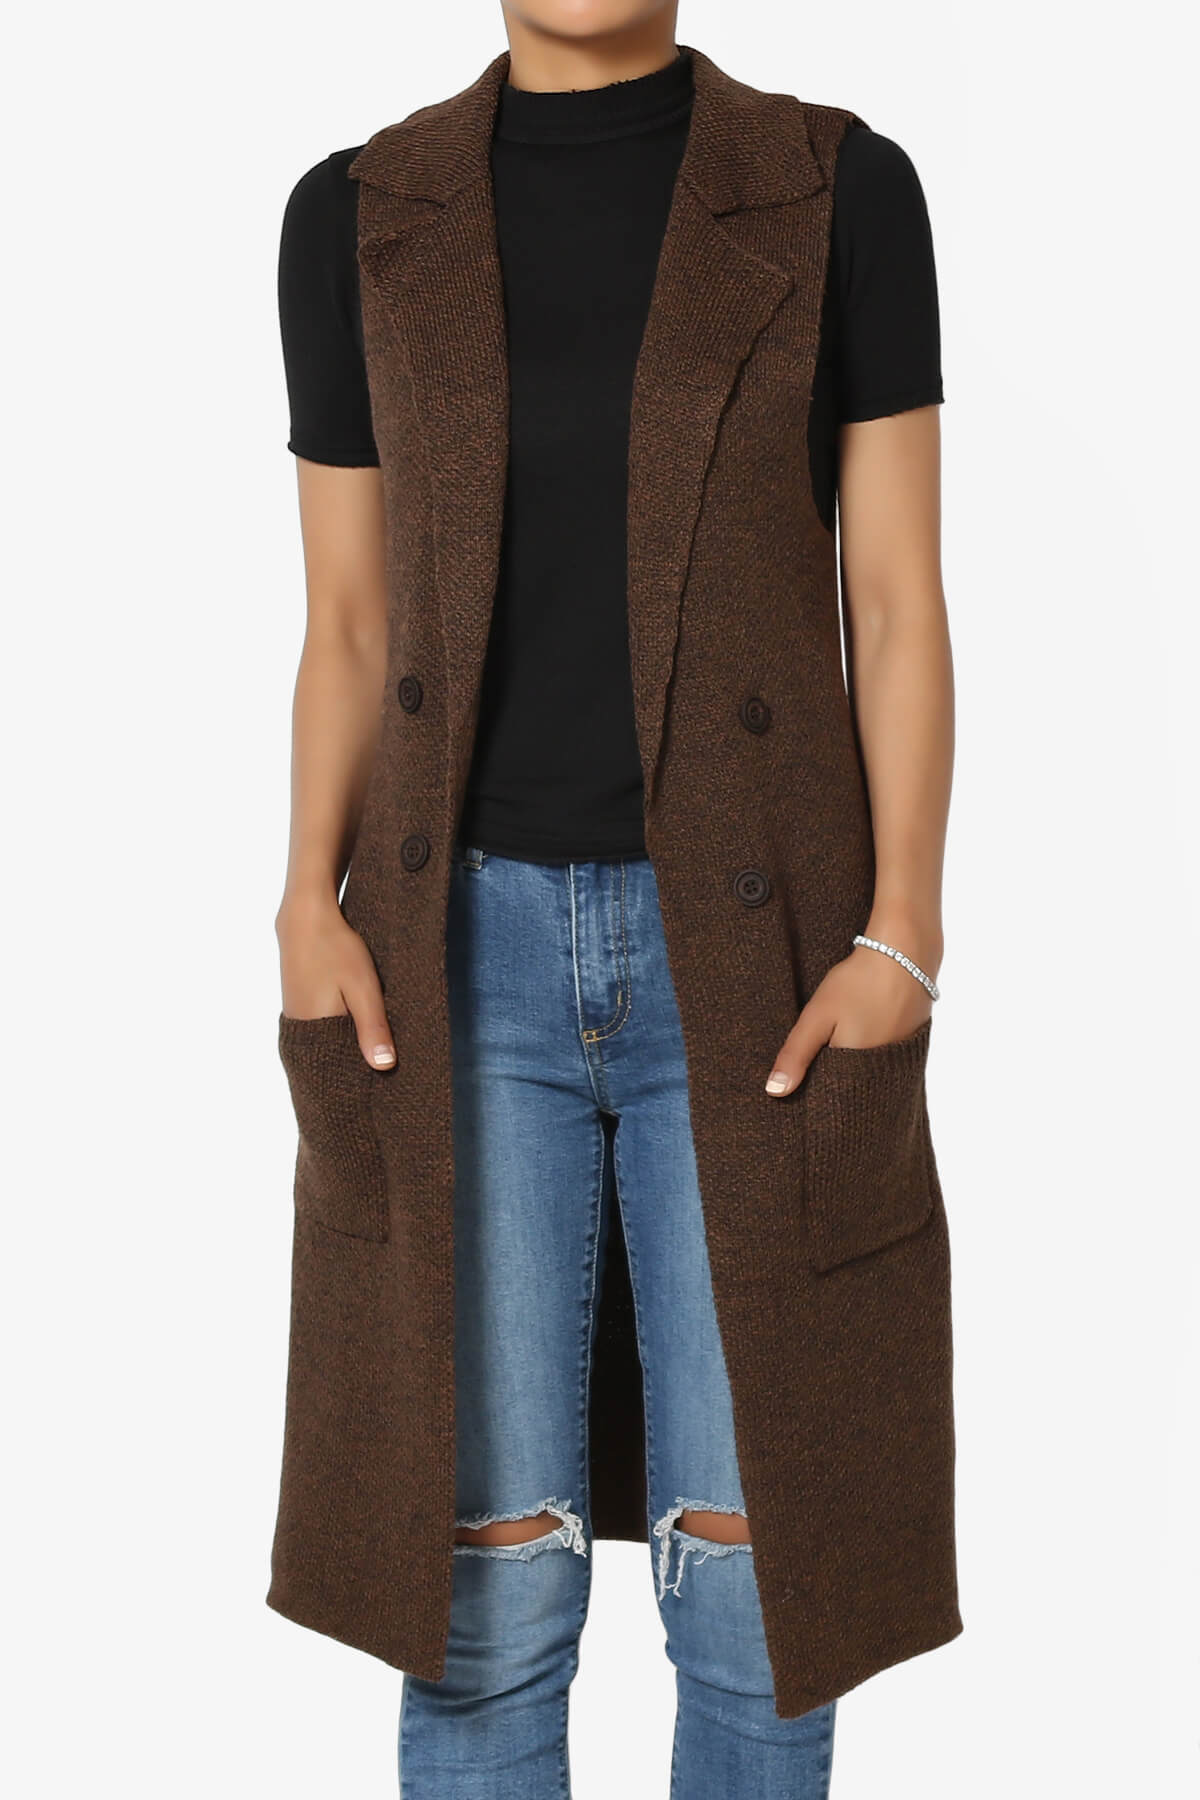 Yaro Sweater Knit Long Vest Gilet BROWN_1